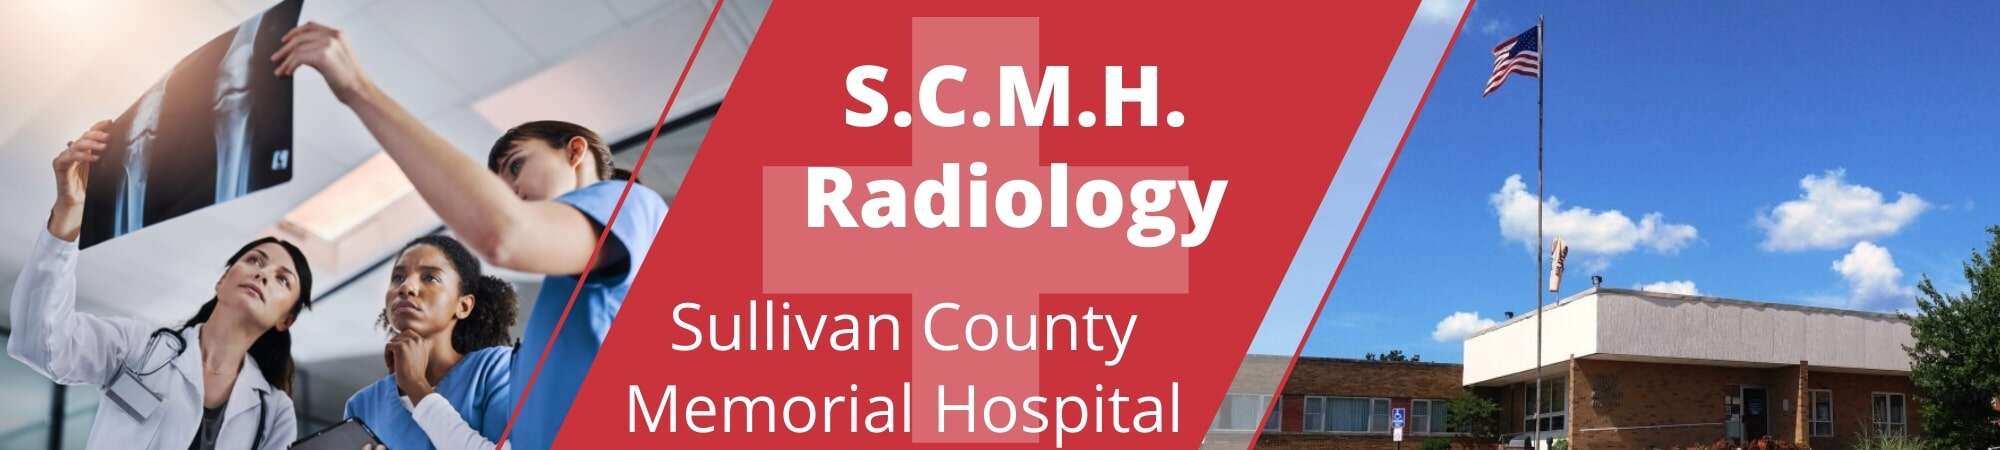 SCMH Radiology